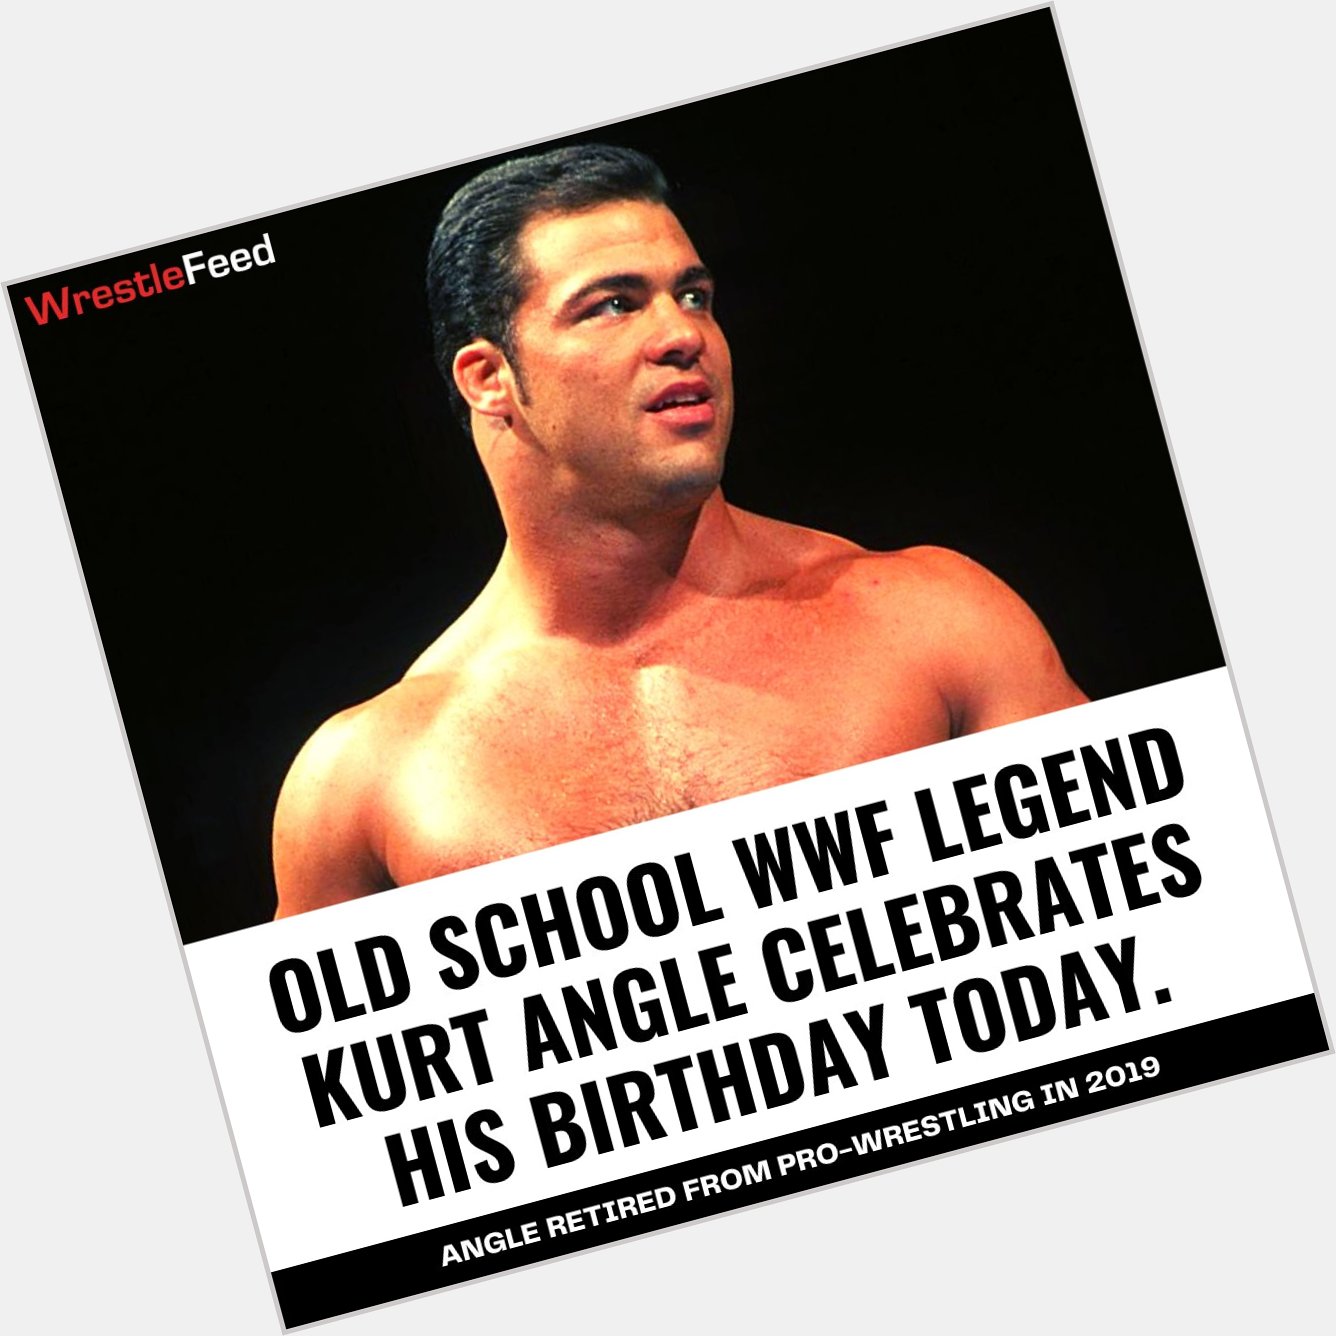 Kurt Angle turns 54 today. Happy Birthday! 